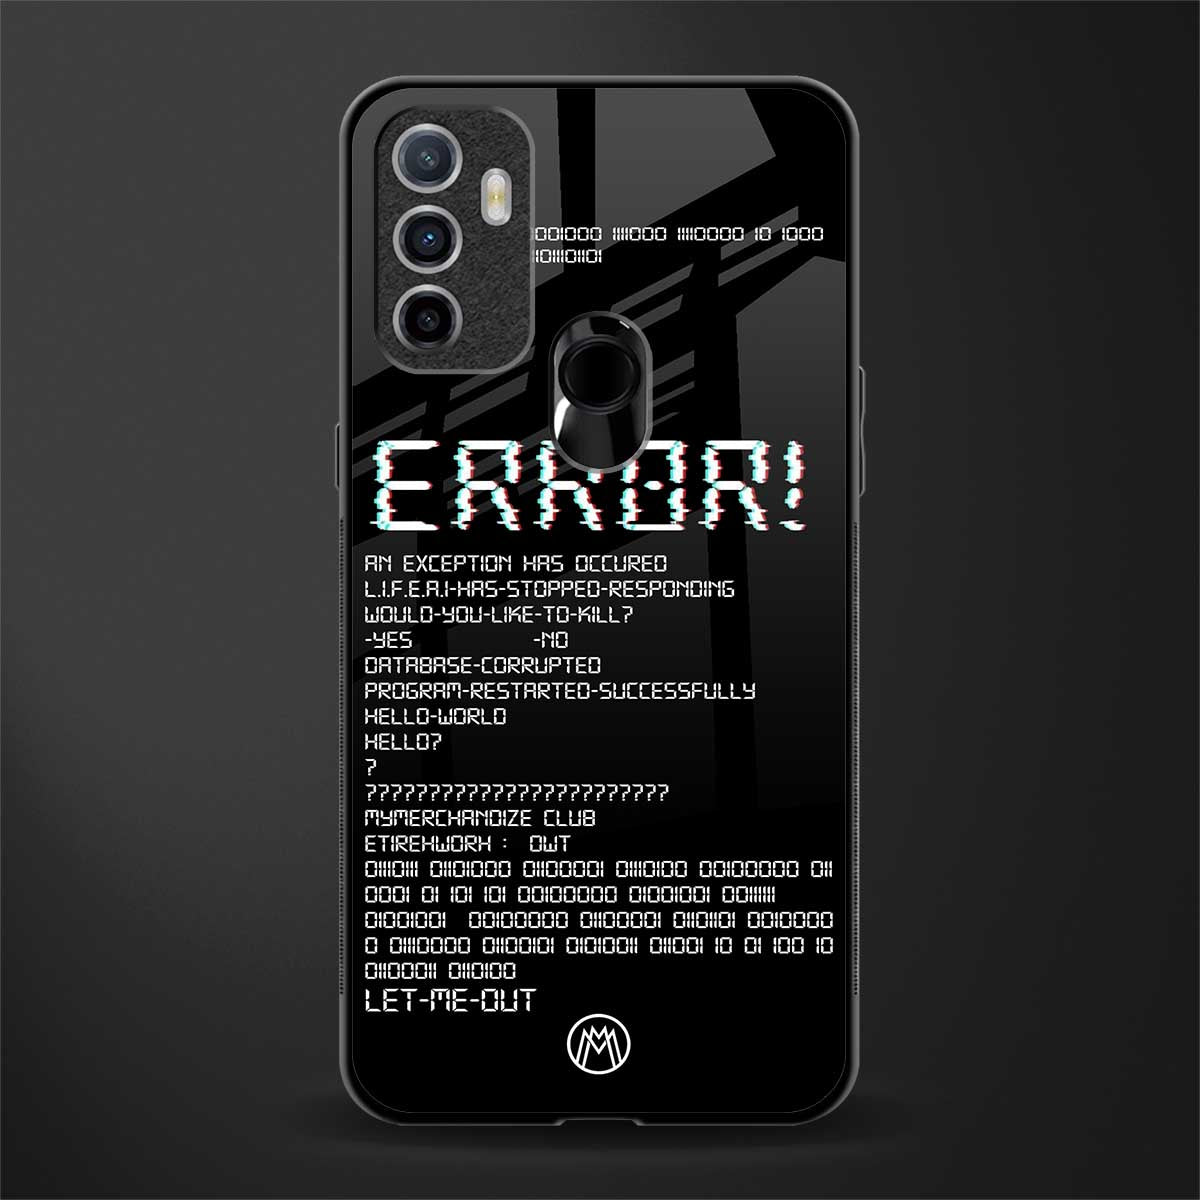 error glass case for oppo a53 image